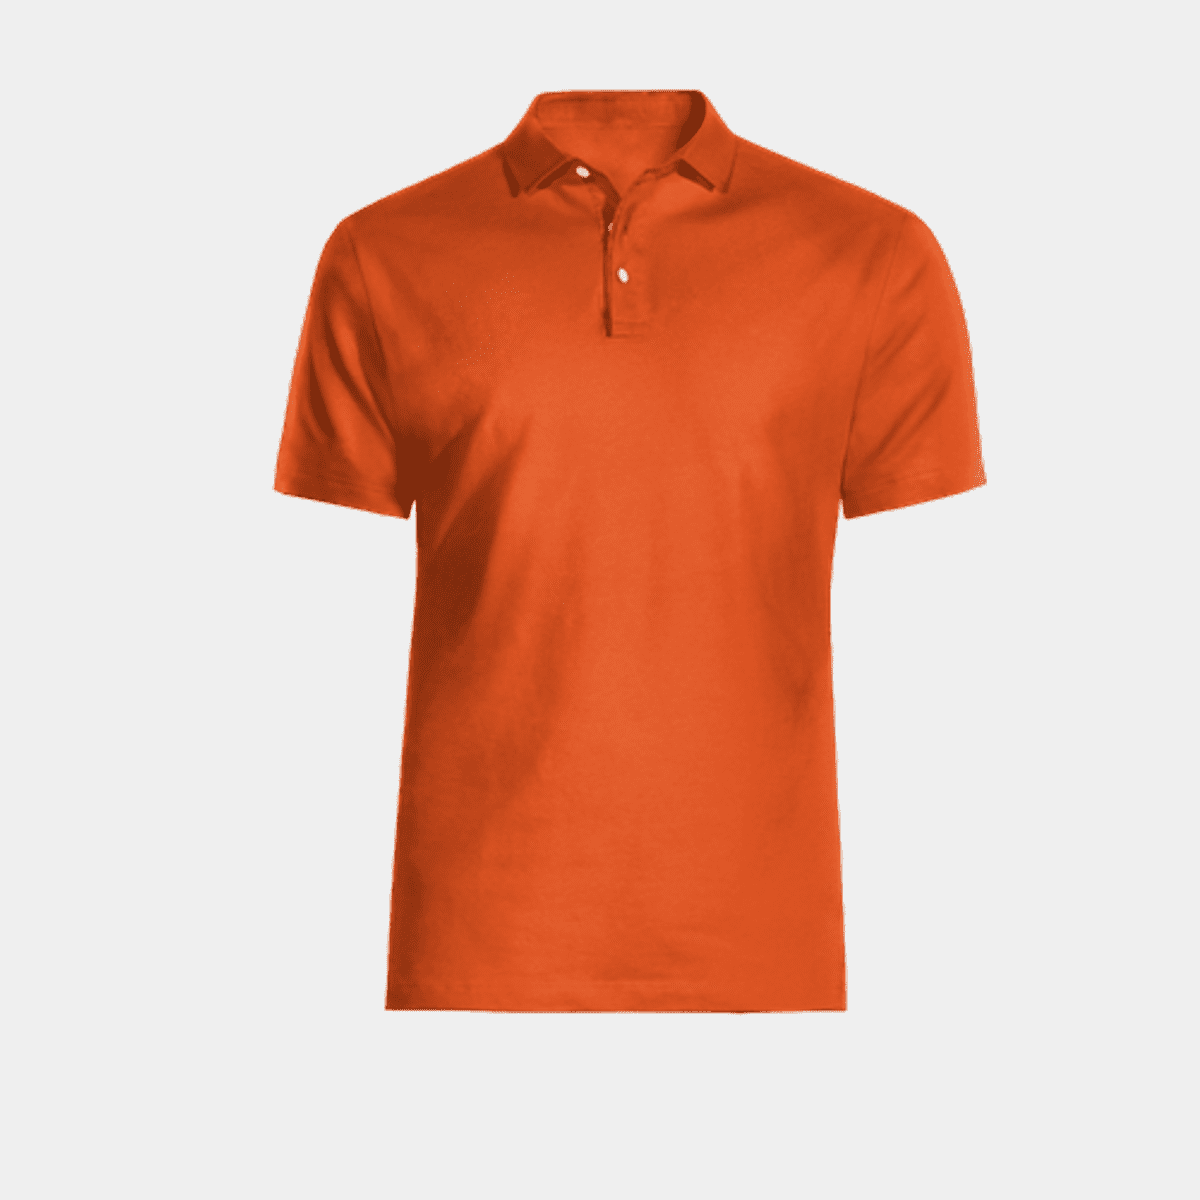 Orange short sleeved slim fit Polo shirt